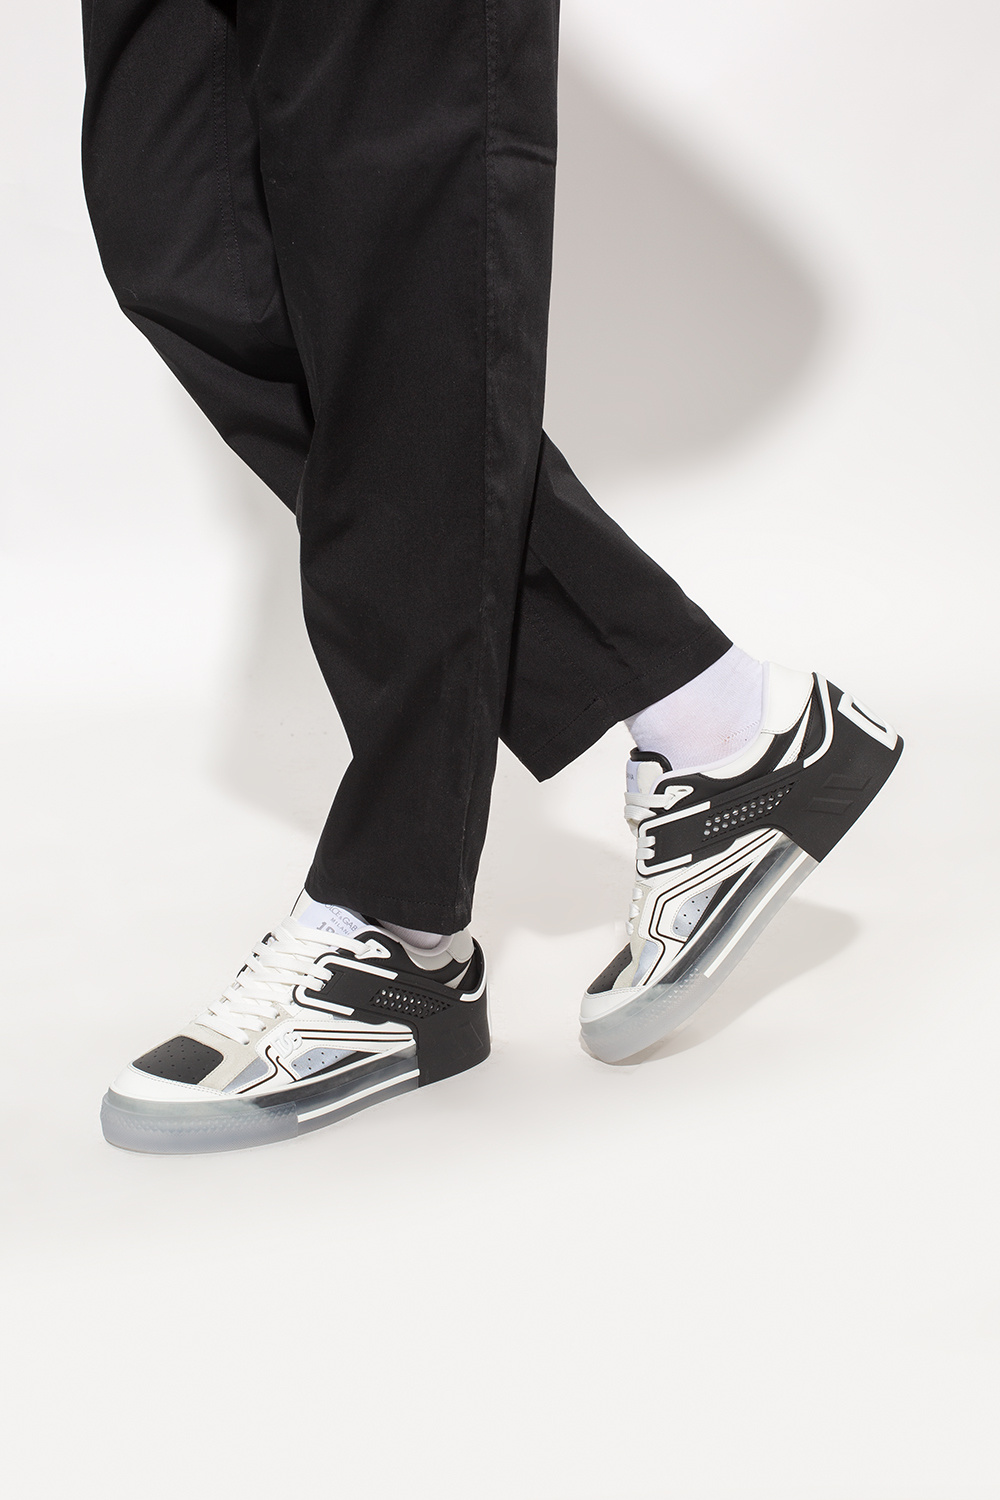 Dolce & Gabbana Pack Of Two Slips ‘Custom 2.Zero’ sneakers